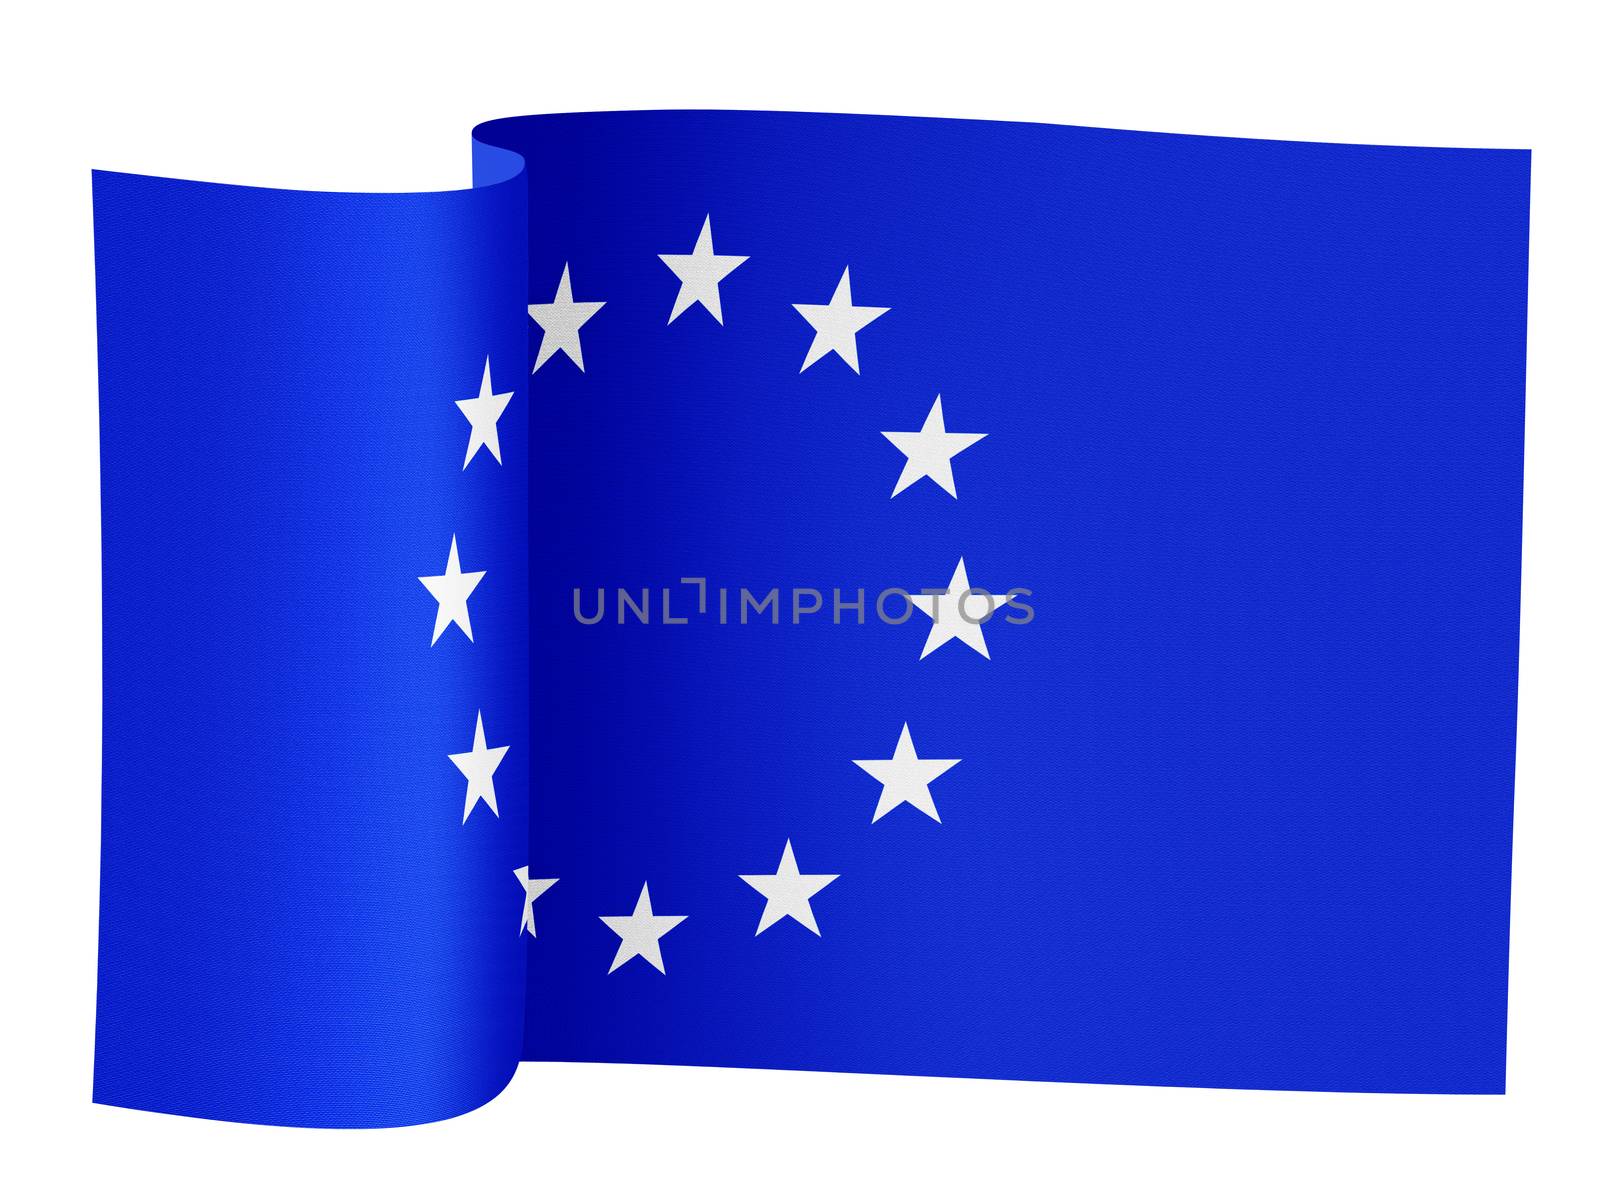 illustration of EU flag by ssuaphoto